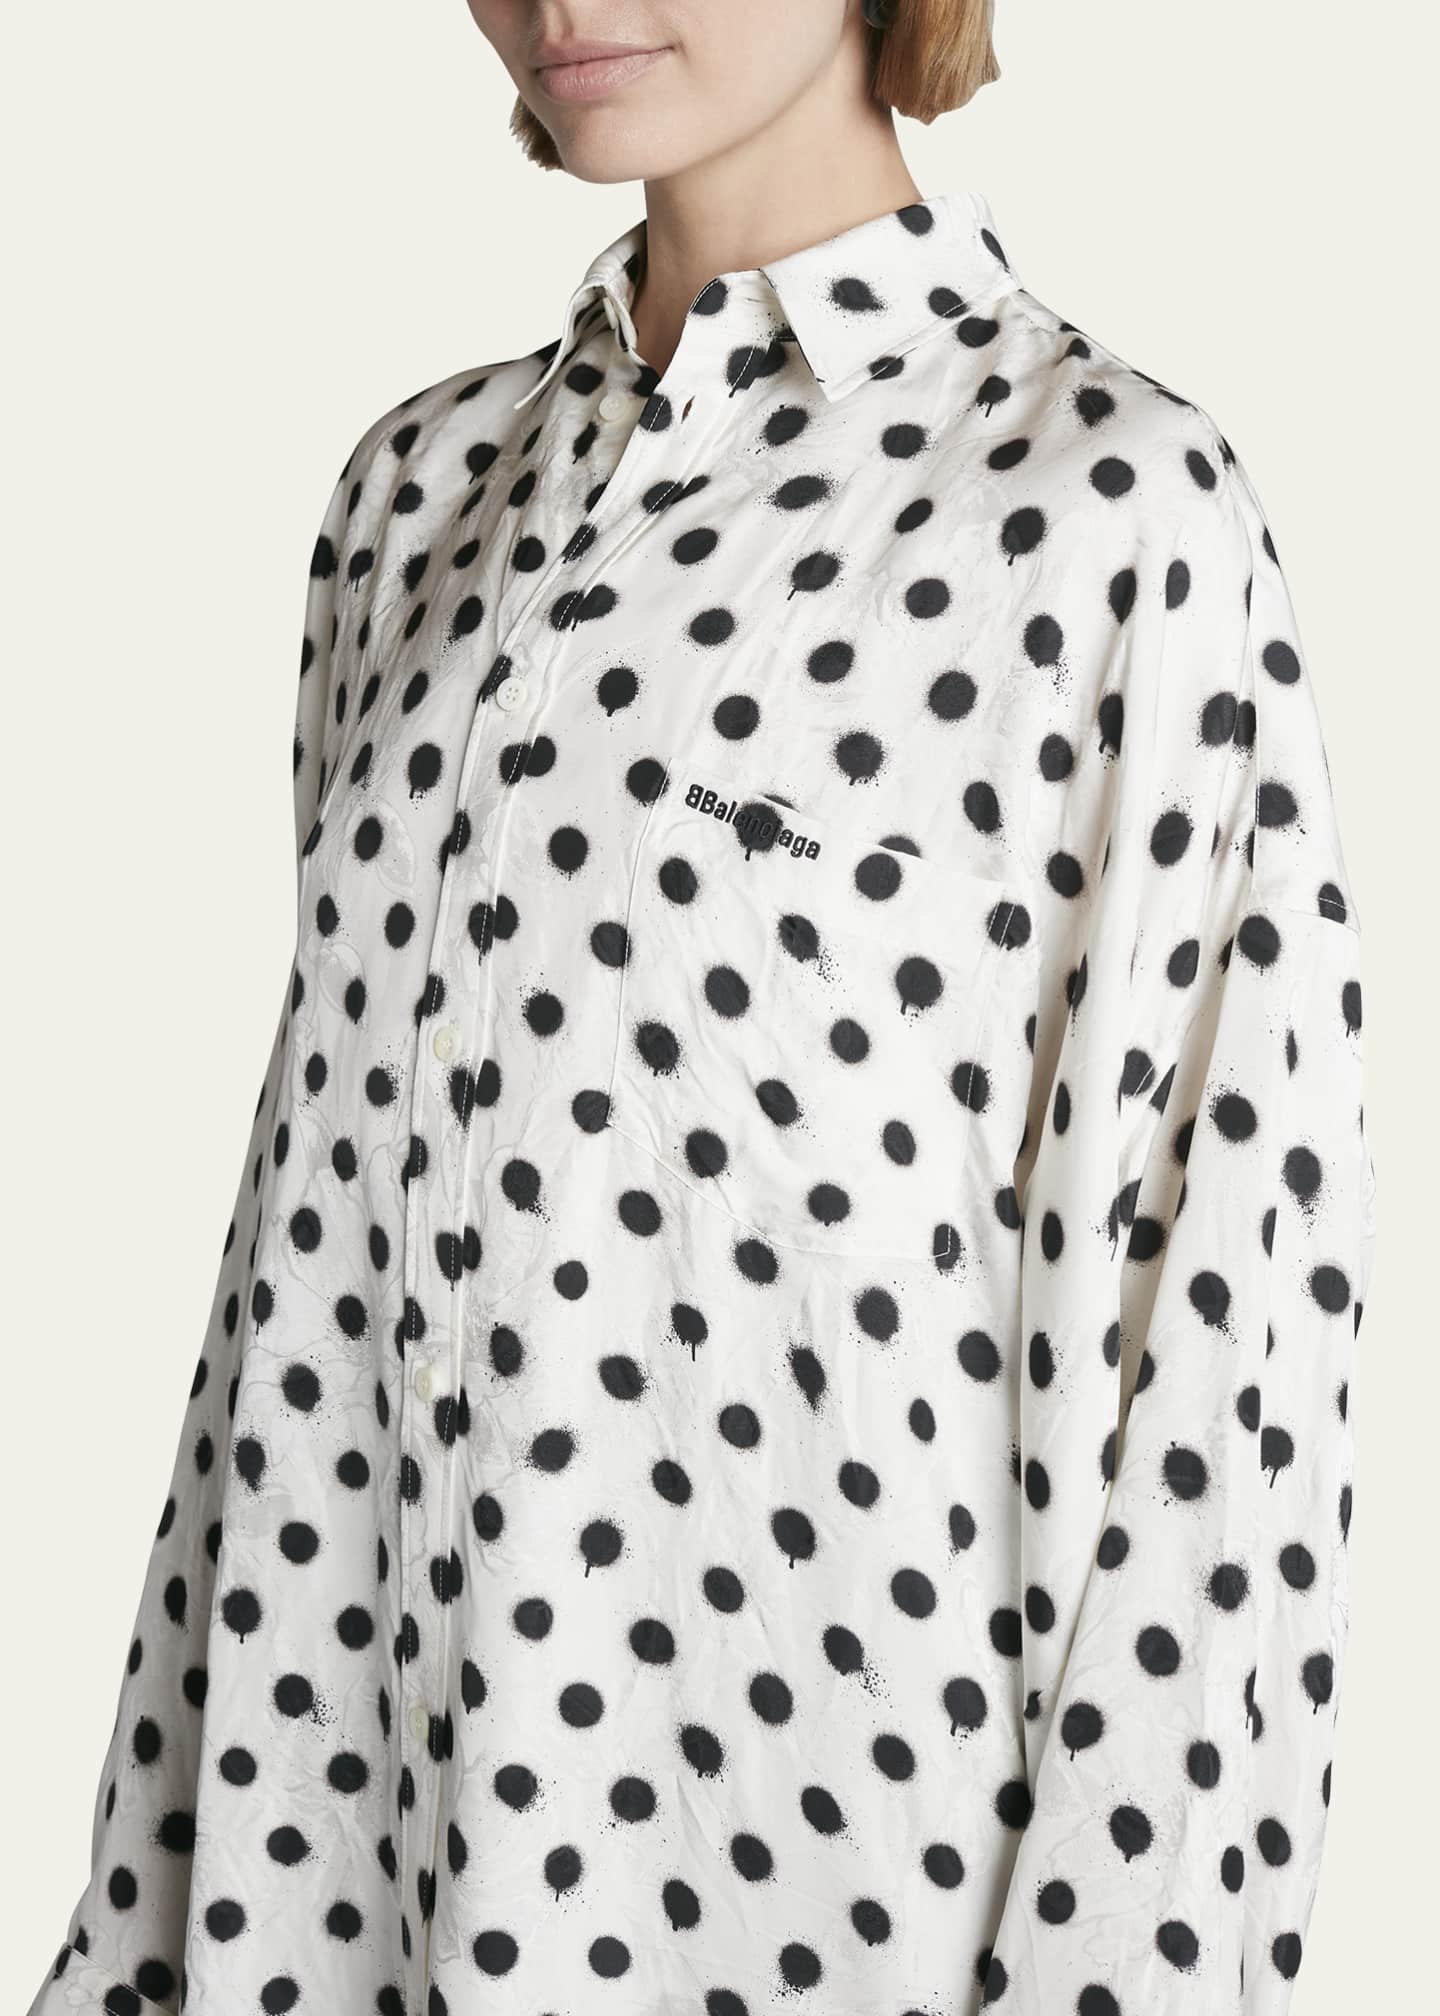 Balenciaga Sprayed Polka Dot Cocoon Shirt - Bergdorf Goodman